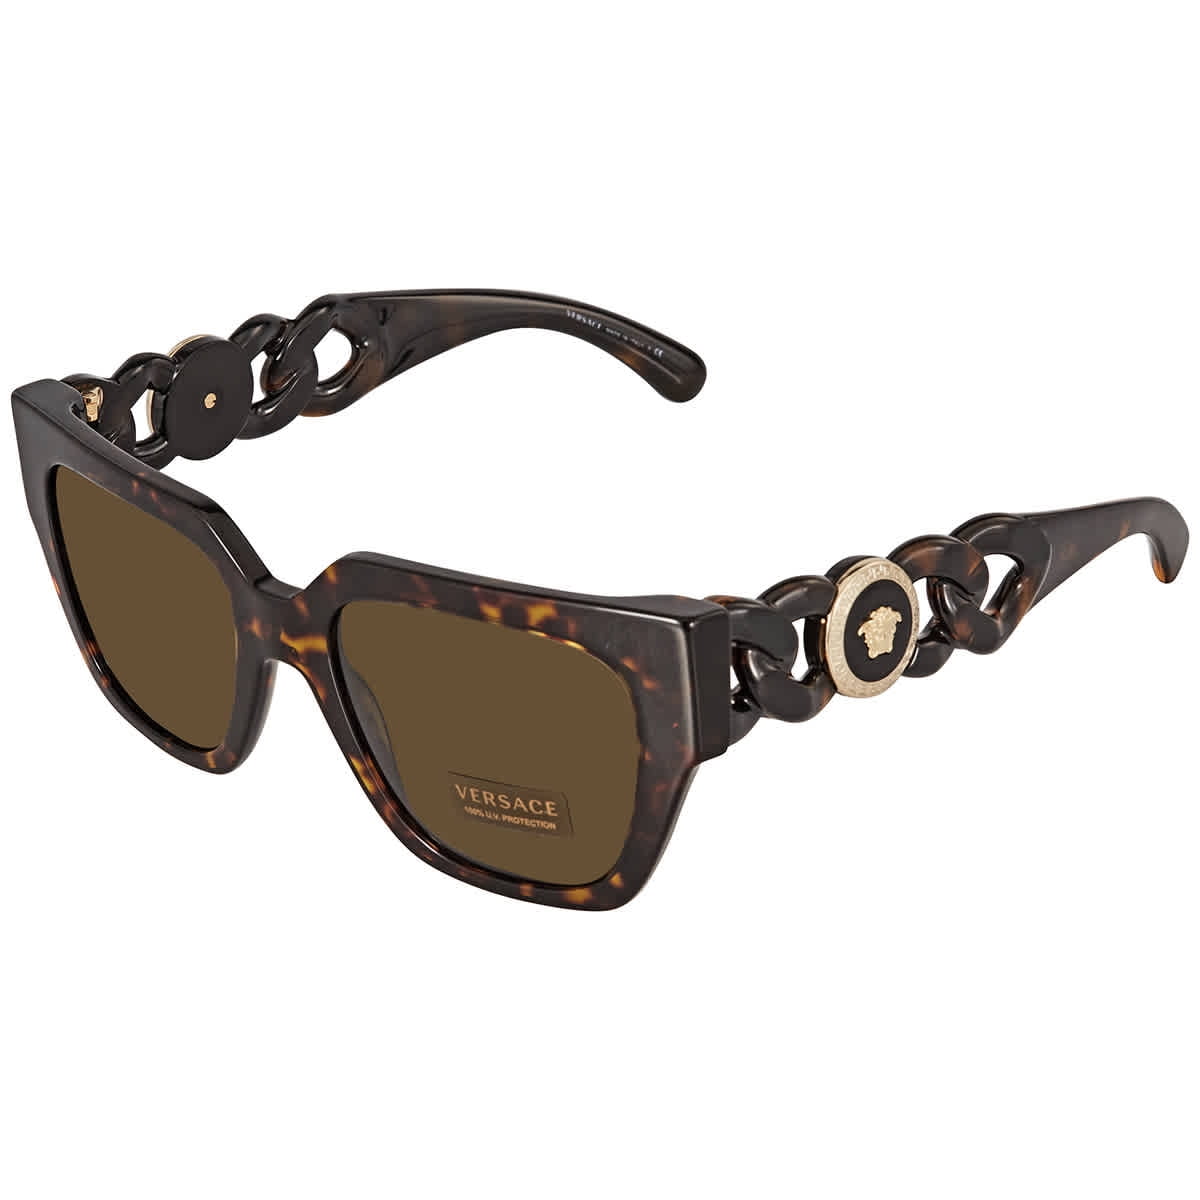 Louis Vuitton LV Edge Large Square Sunglasses Light Tortoise Acetate & Metal. Size W